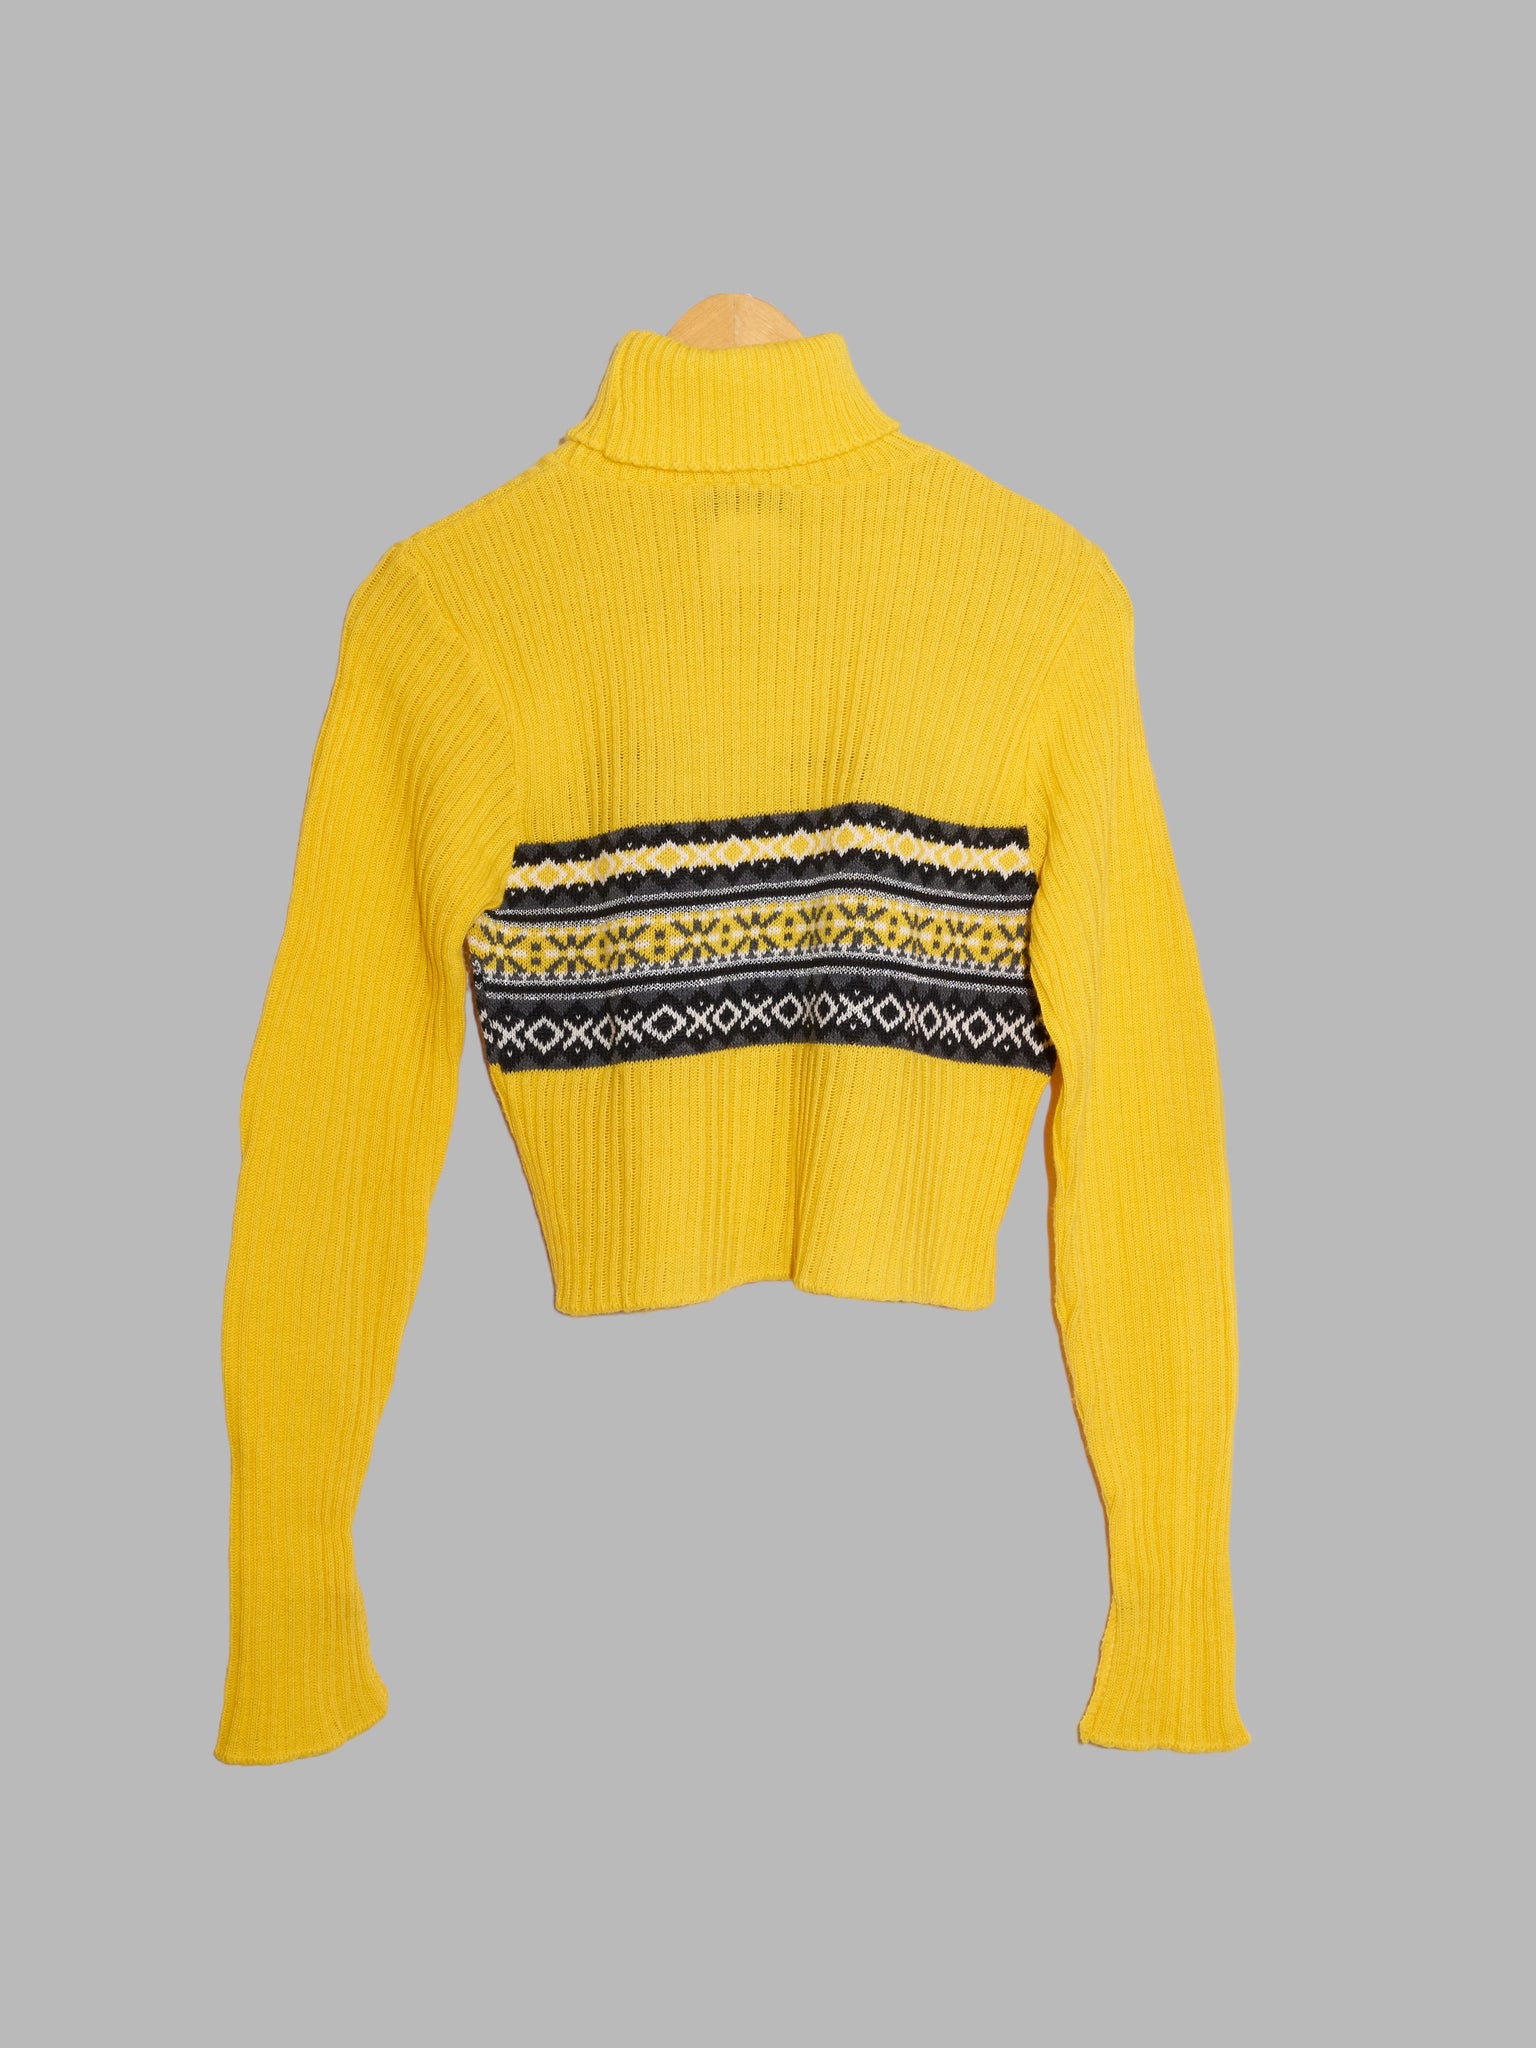 Morgan de Toi cropped yellow fair isle pattern turtleneck jumper